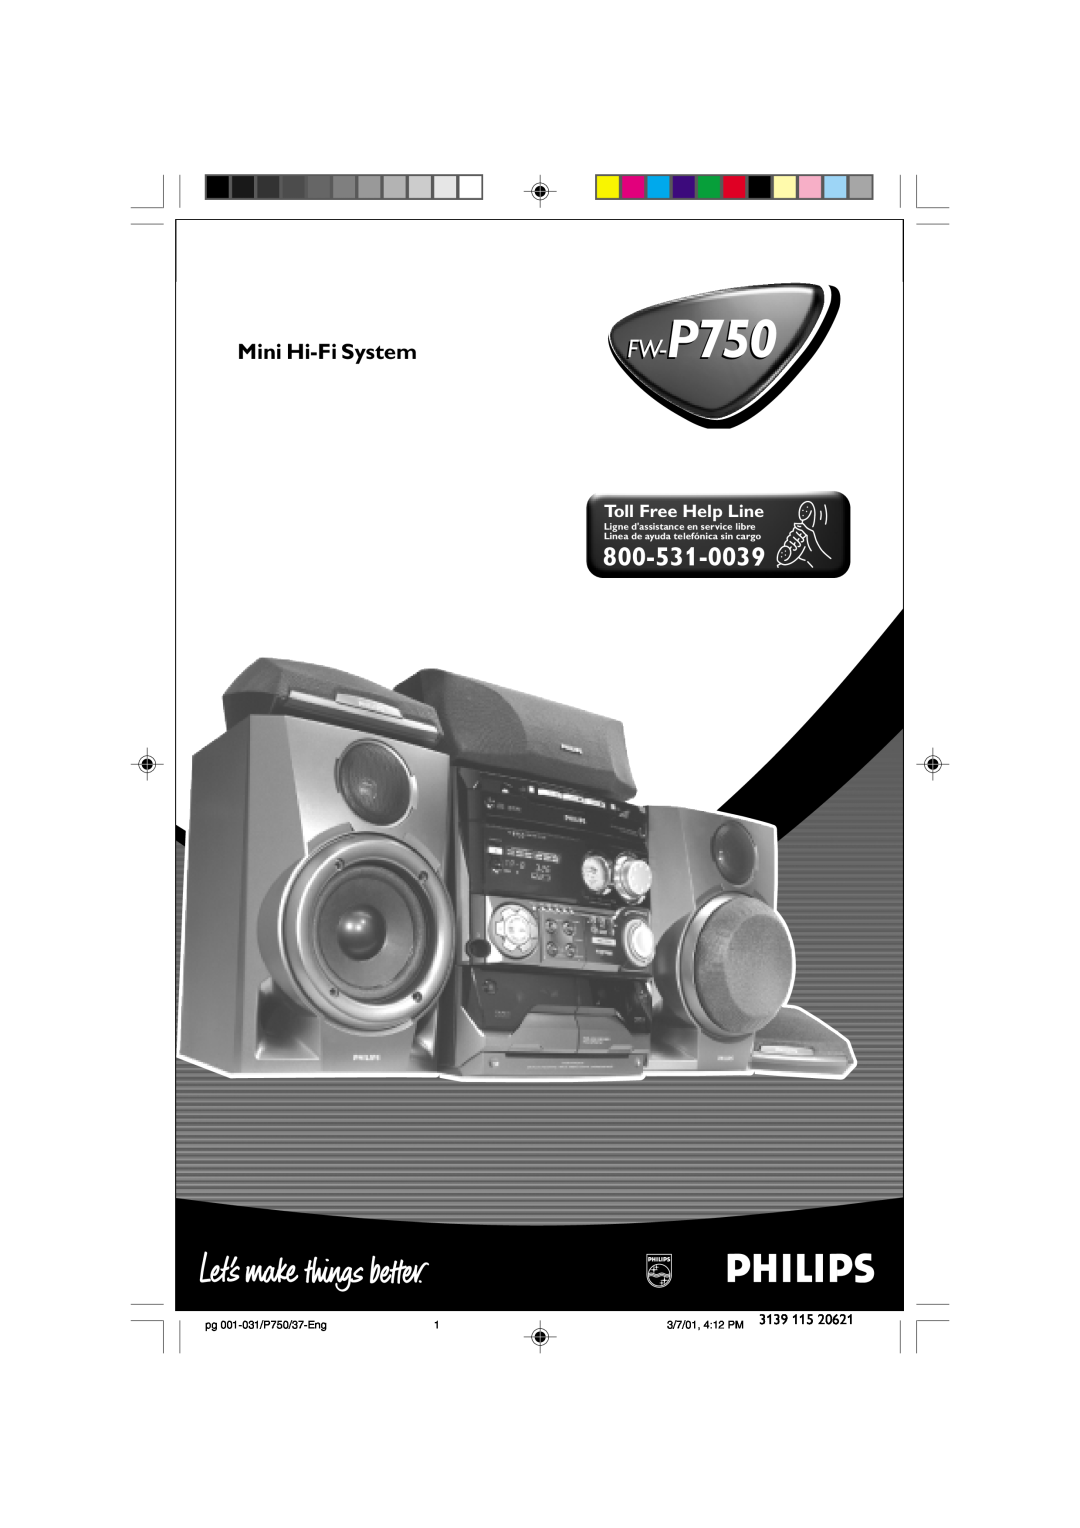 Philips FWP750 manual Mini Hi-FiSystem, FW--P750, Toll Free Help Line, pg 001-031/P750/37-Eng, 3/7/01, 4:12 PM 